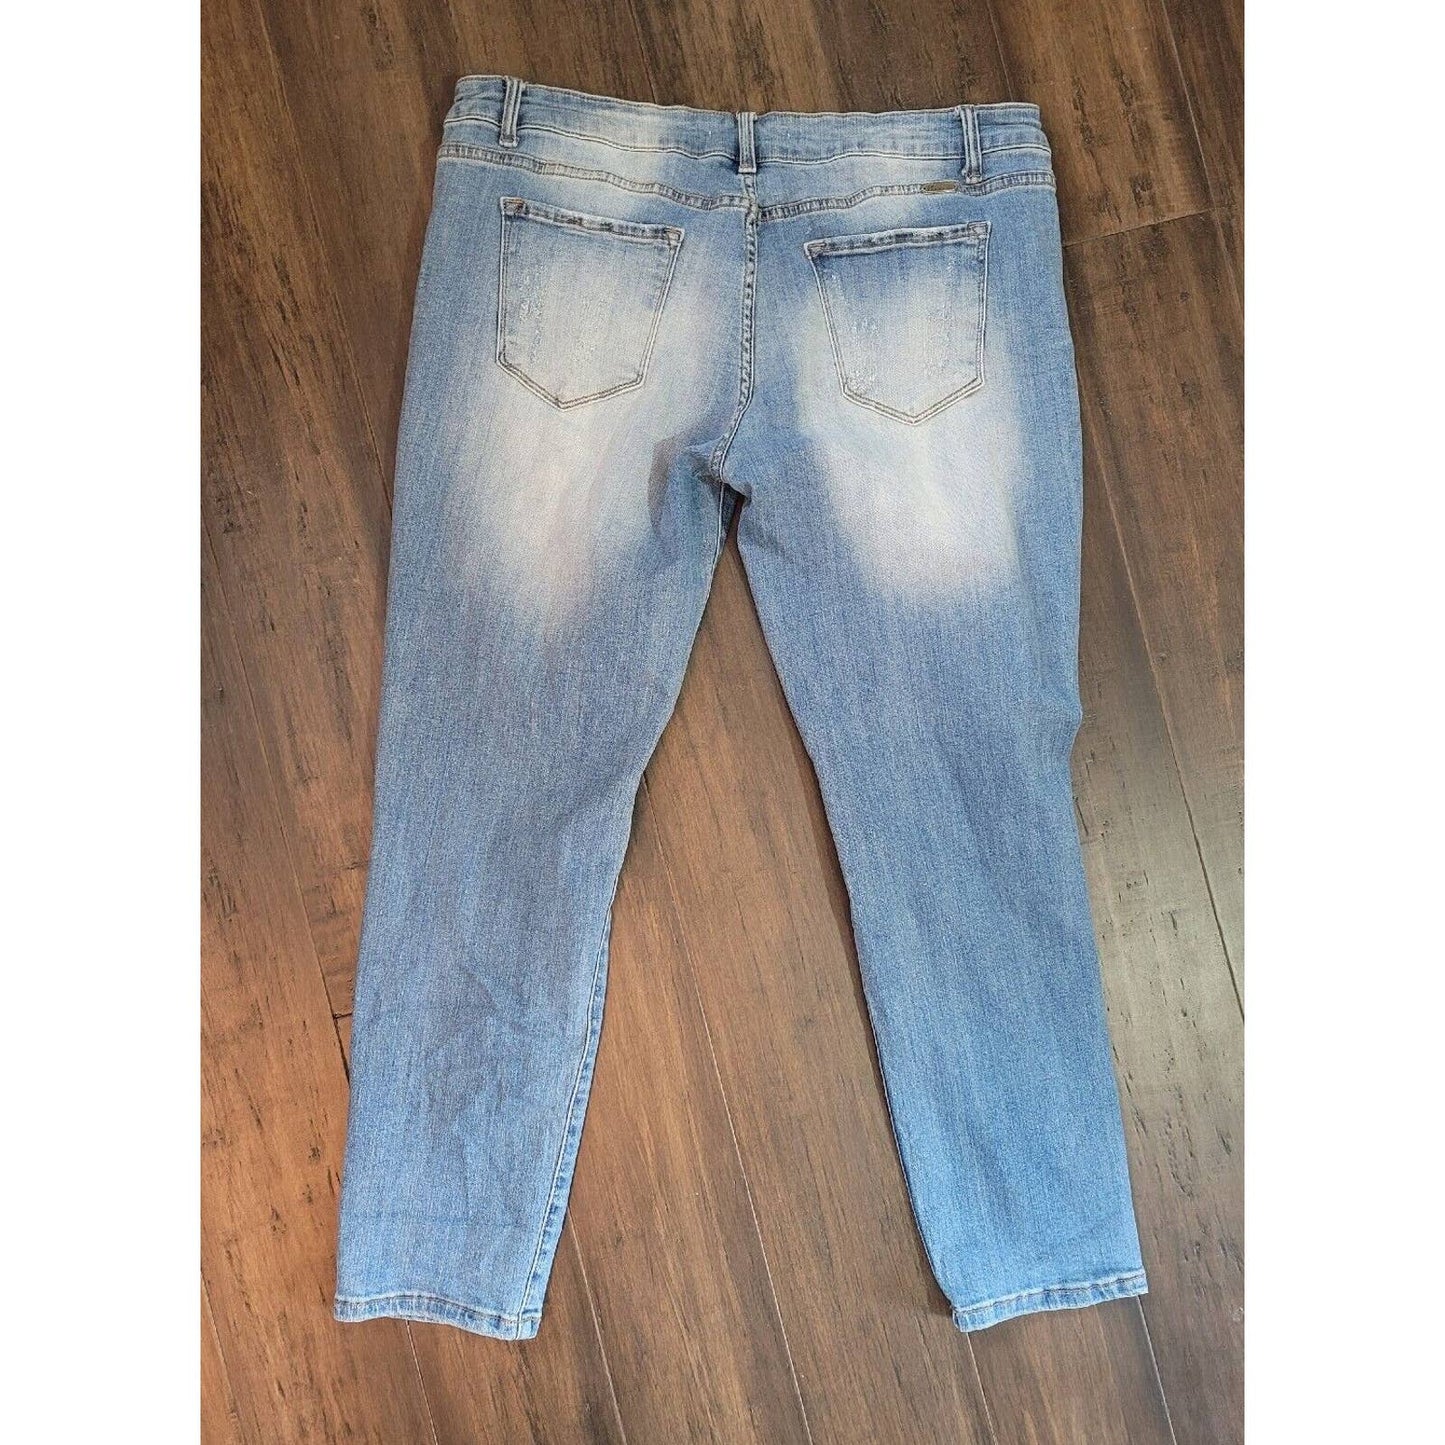 KanCan Jeans Distressed Hi Rise Stretch Skinny Light Wash Size 3XL